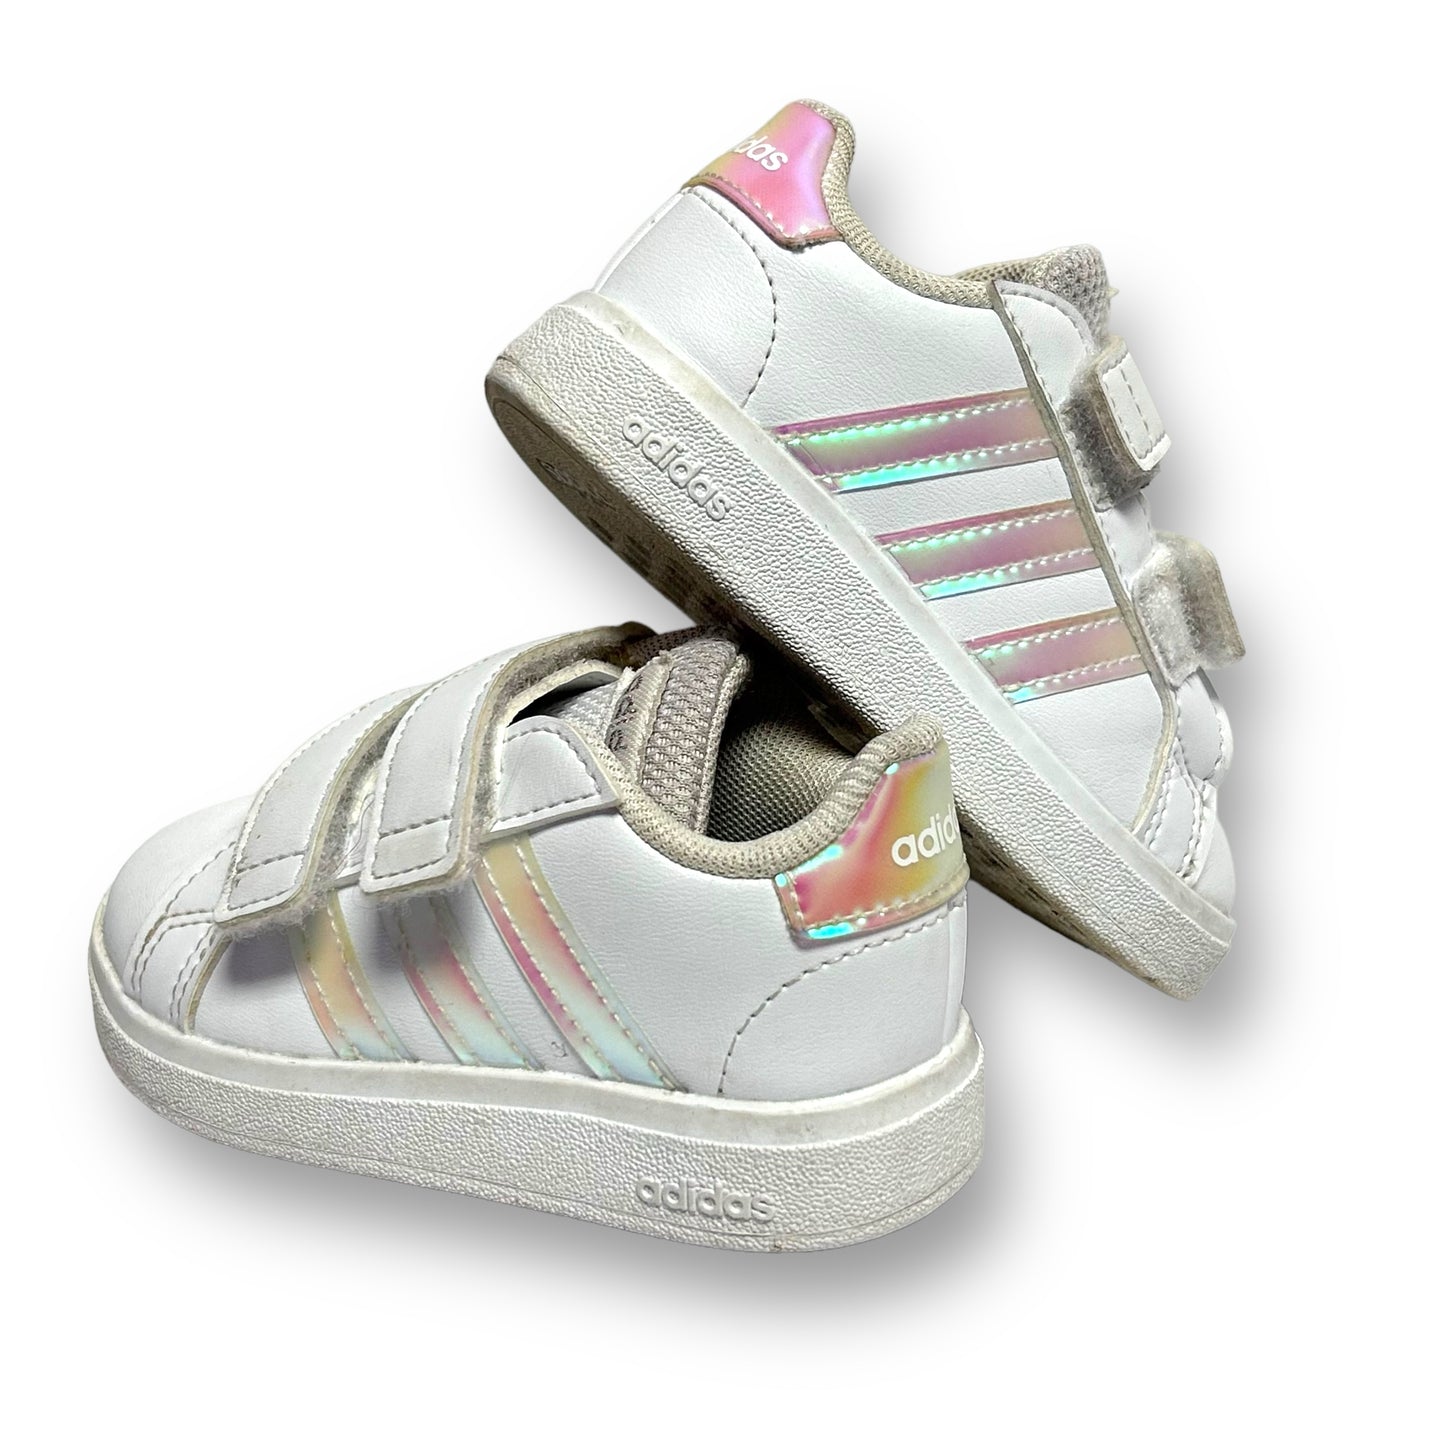 Adidas Toddler Girl Size 5 White / Pearl Metallic No-Tie Sneakers